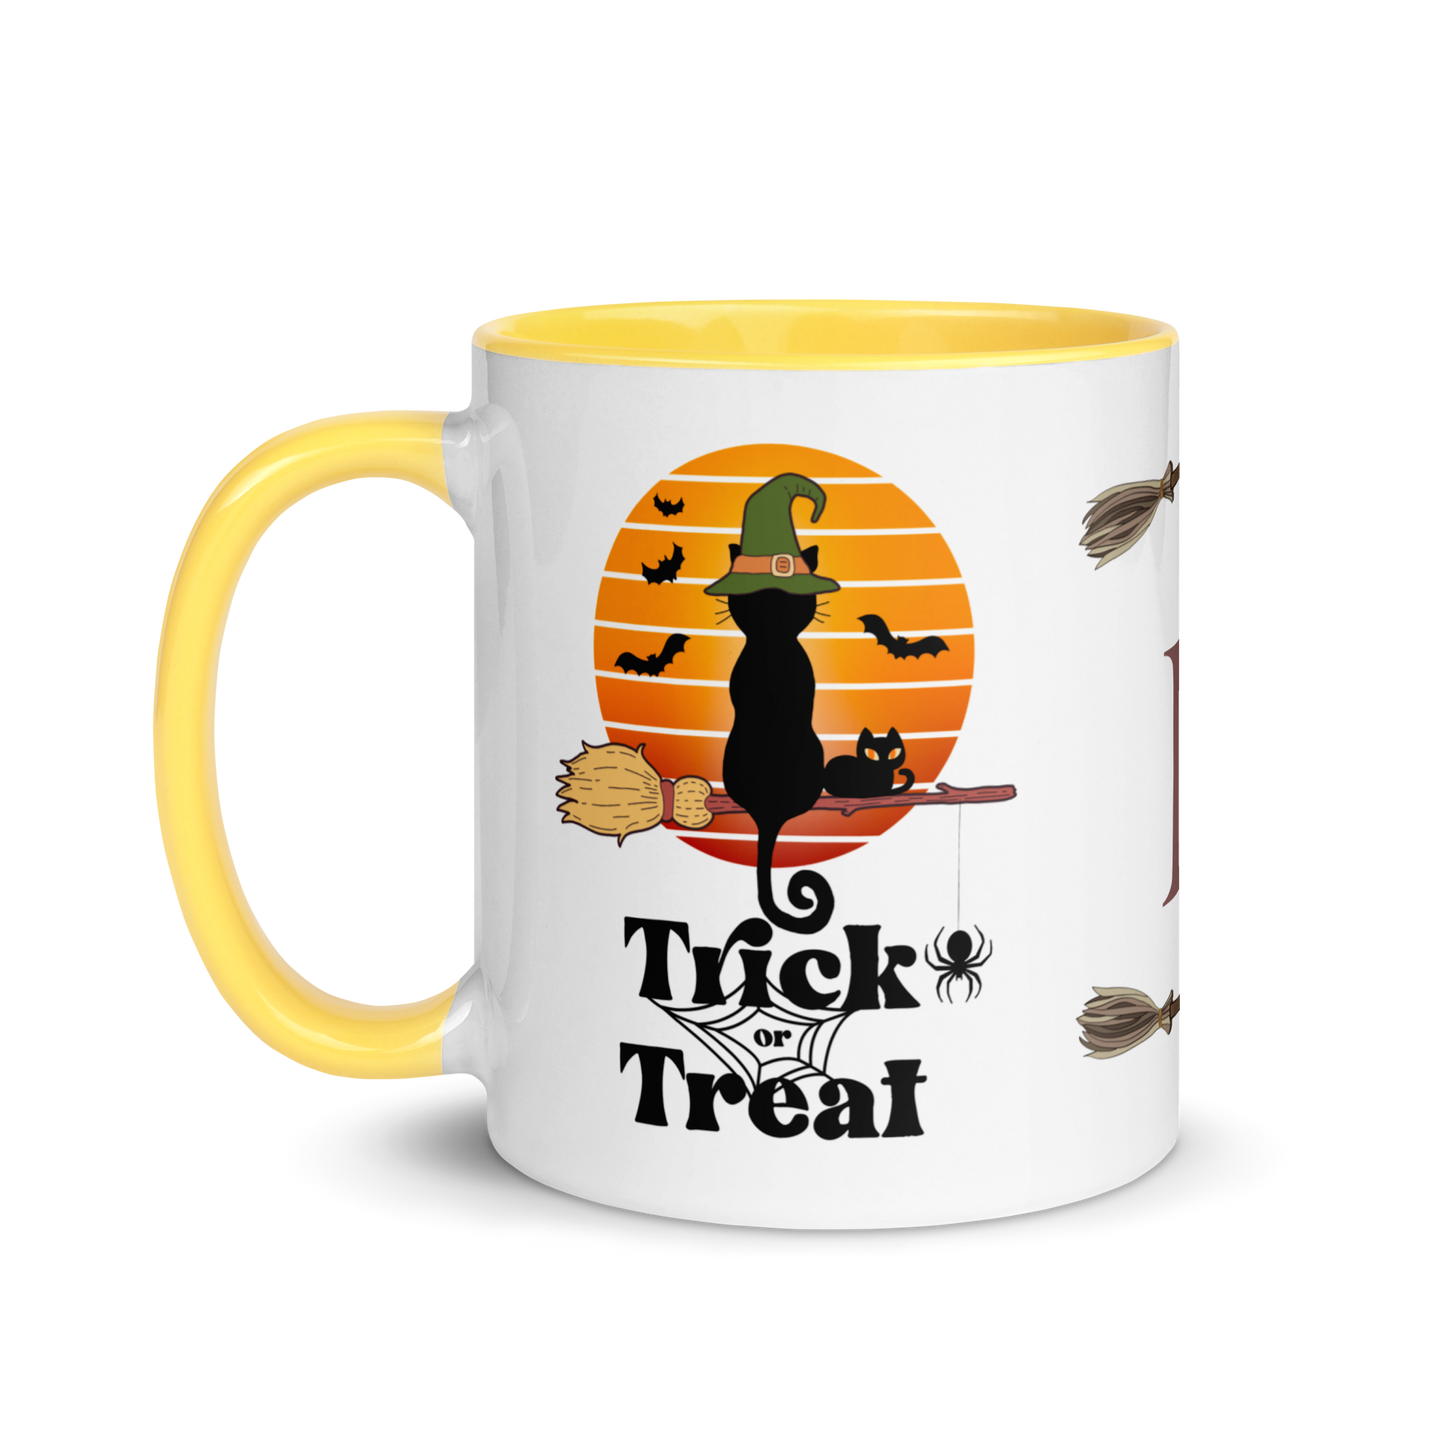 Monogramed Coffee Mug 11oz | Trick or Treat Black Cat With Green Hat